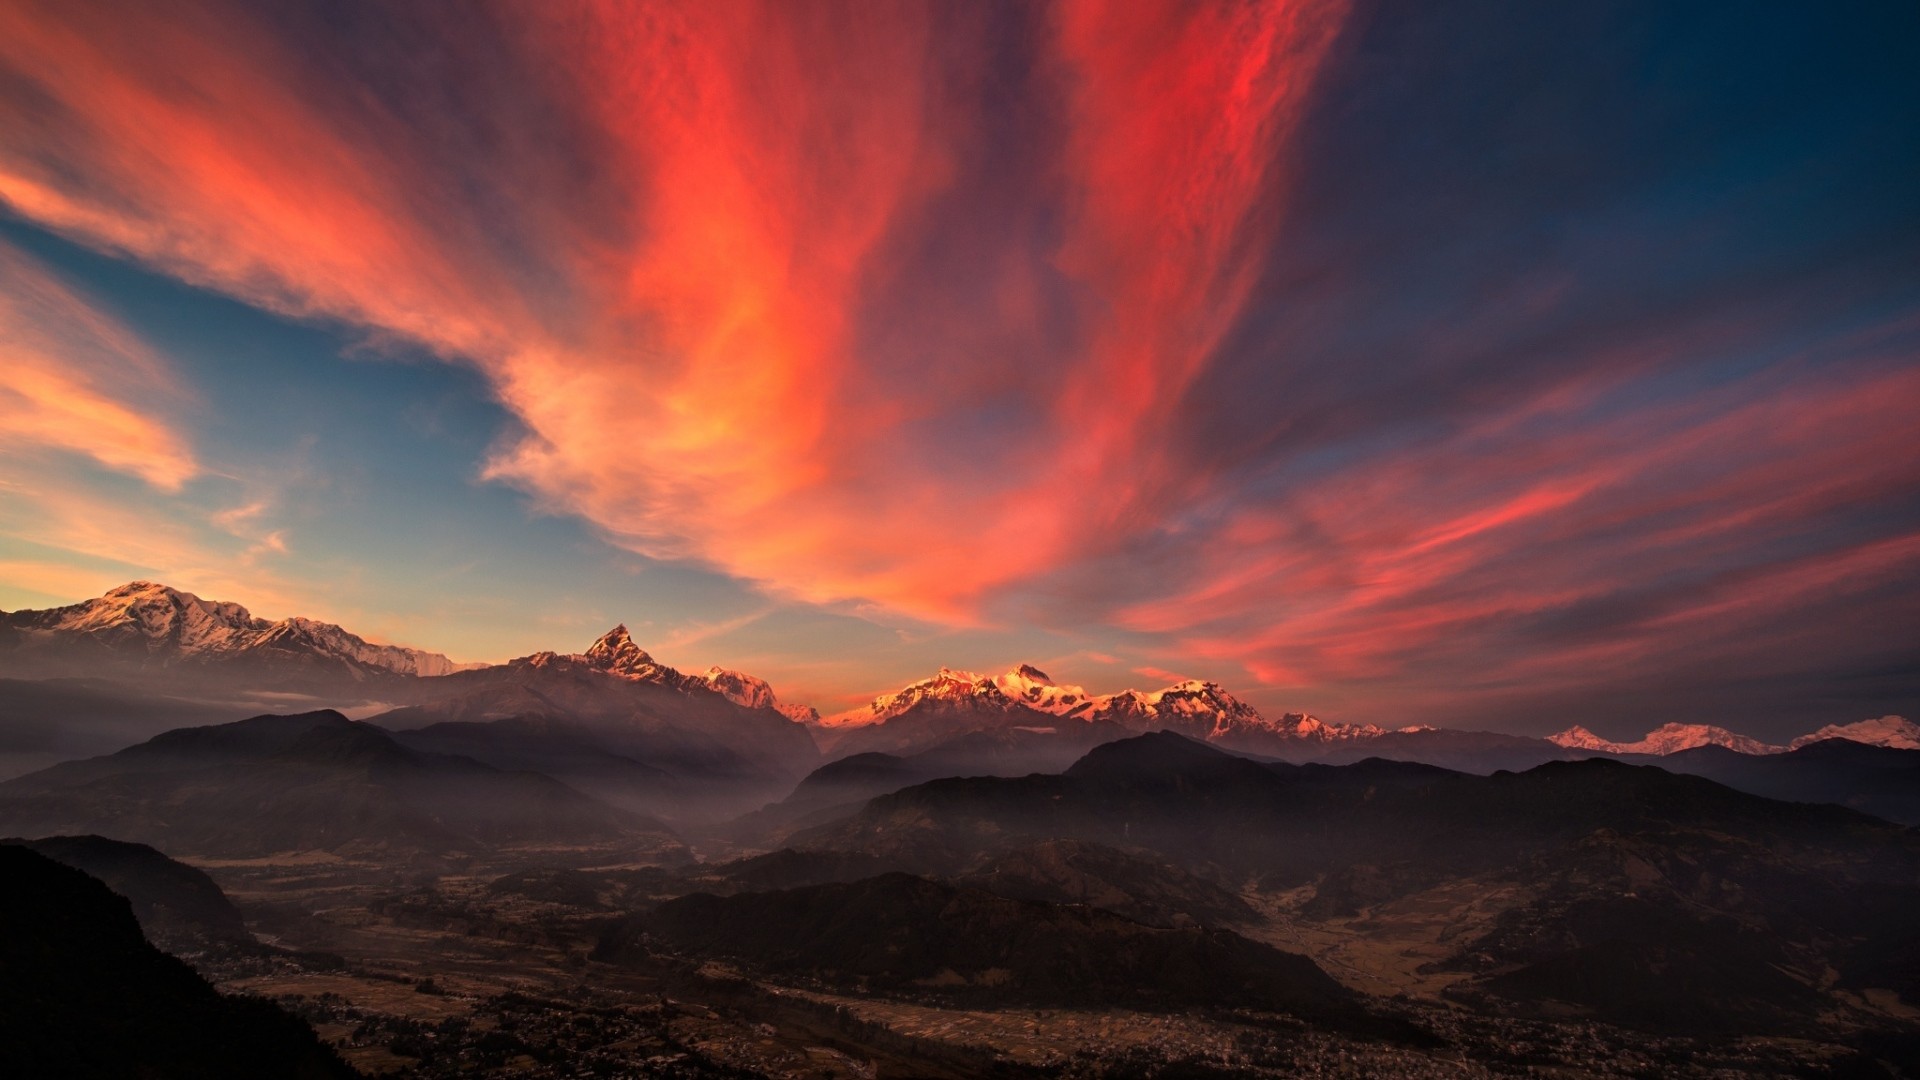 Preview Wallpaper Tibet Mountains Sunset Sky Panorama 1920x1080 1920x1080